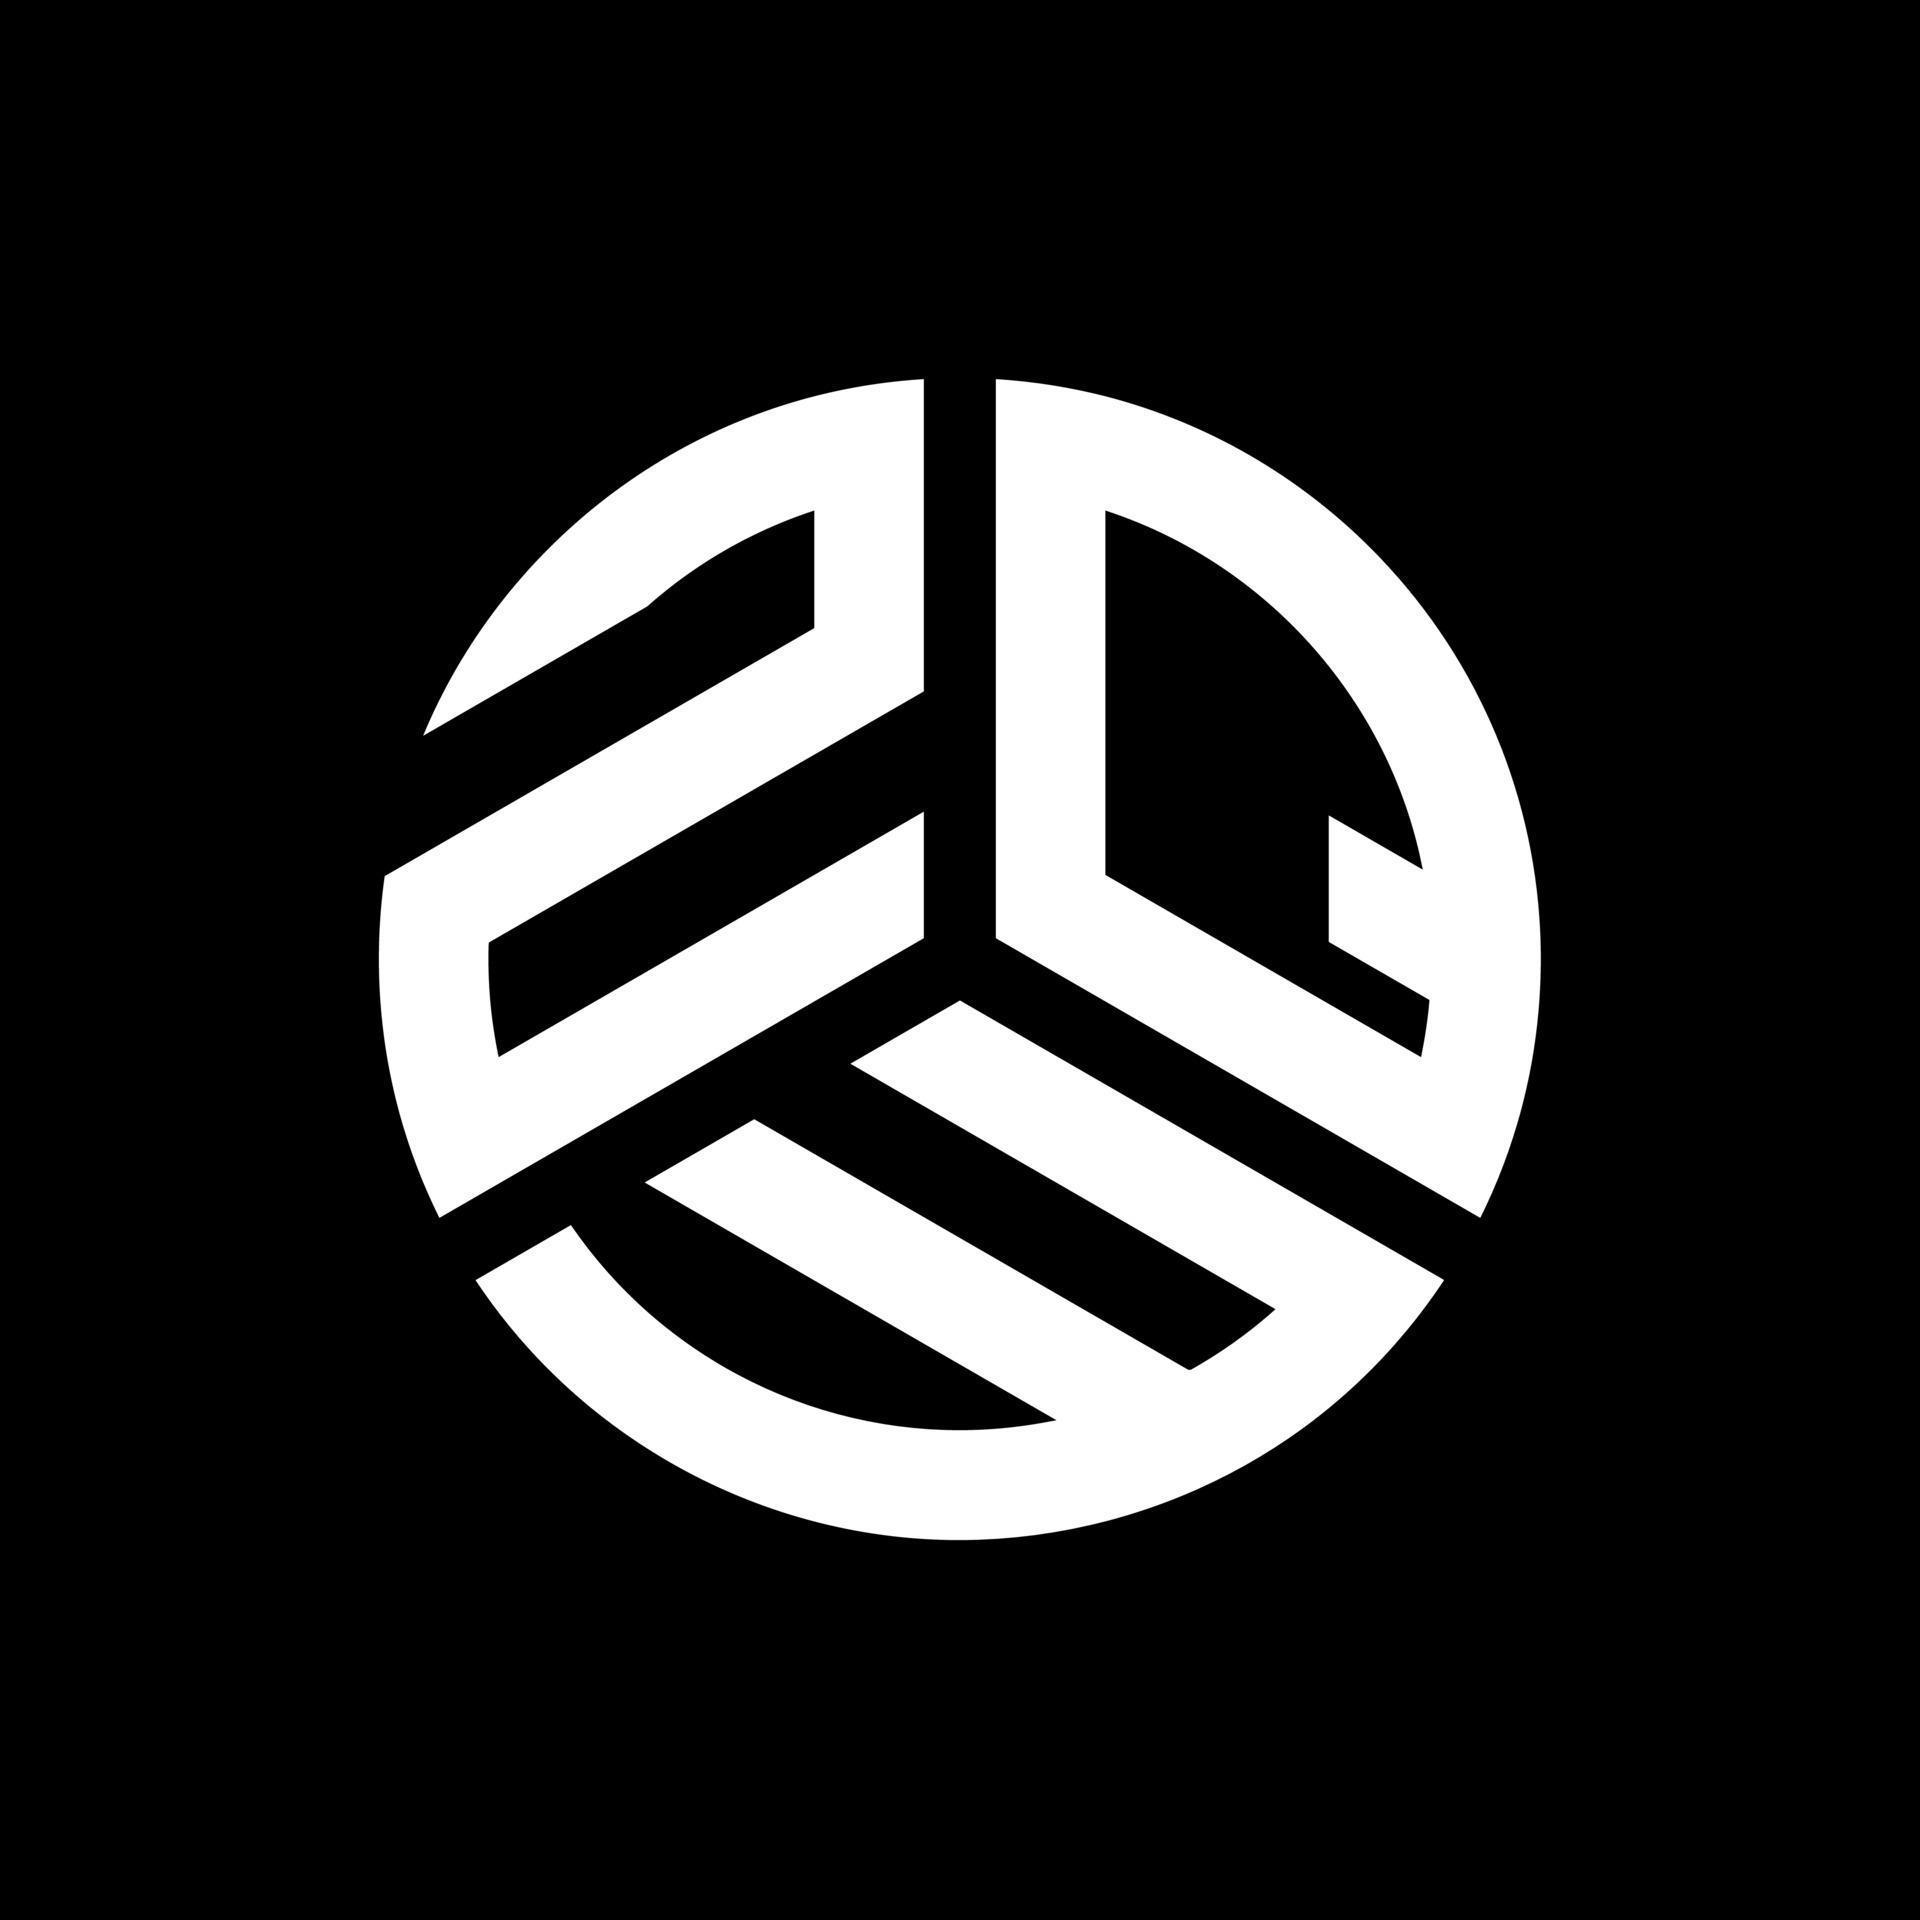 zqw brief logo ontwerp op zwarte achtergrond. zqw creatieve initialen brief logo concept. zqw brief ontwerp. vector